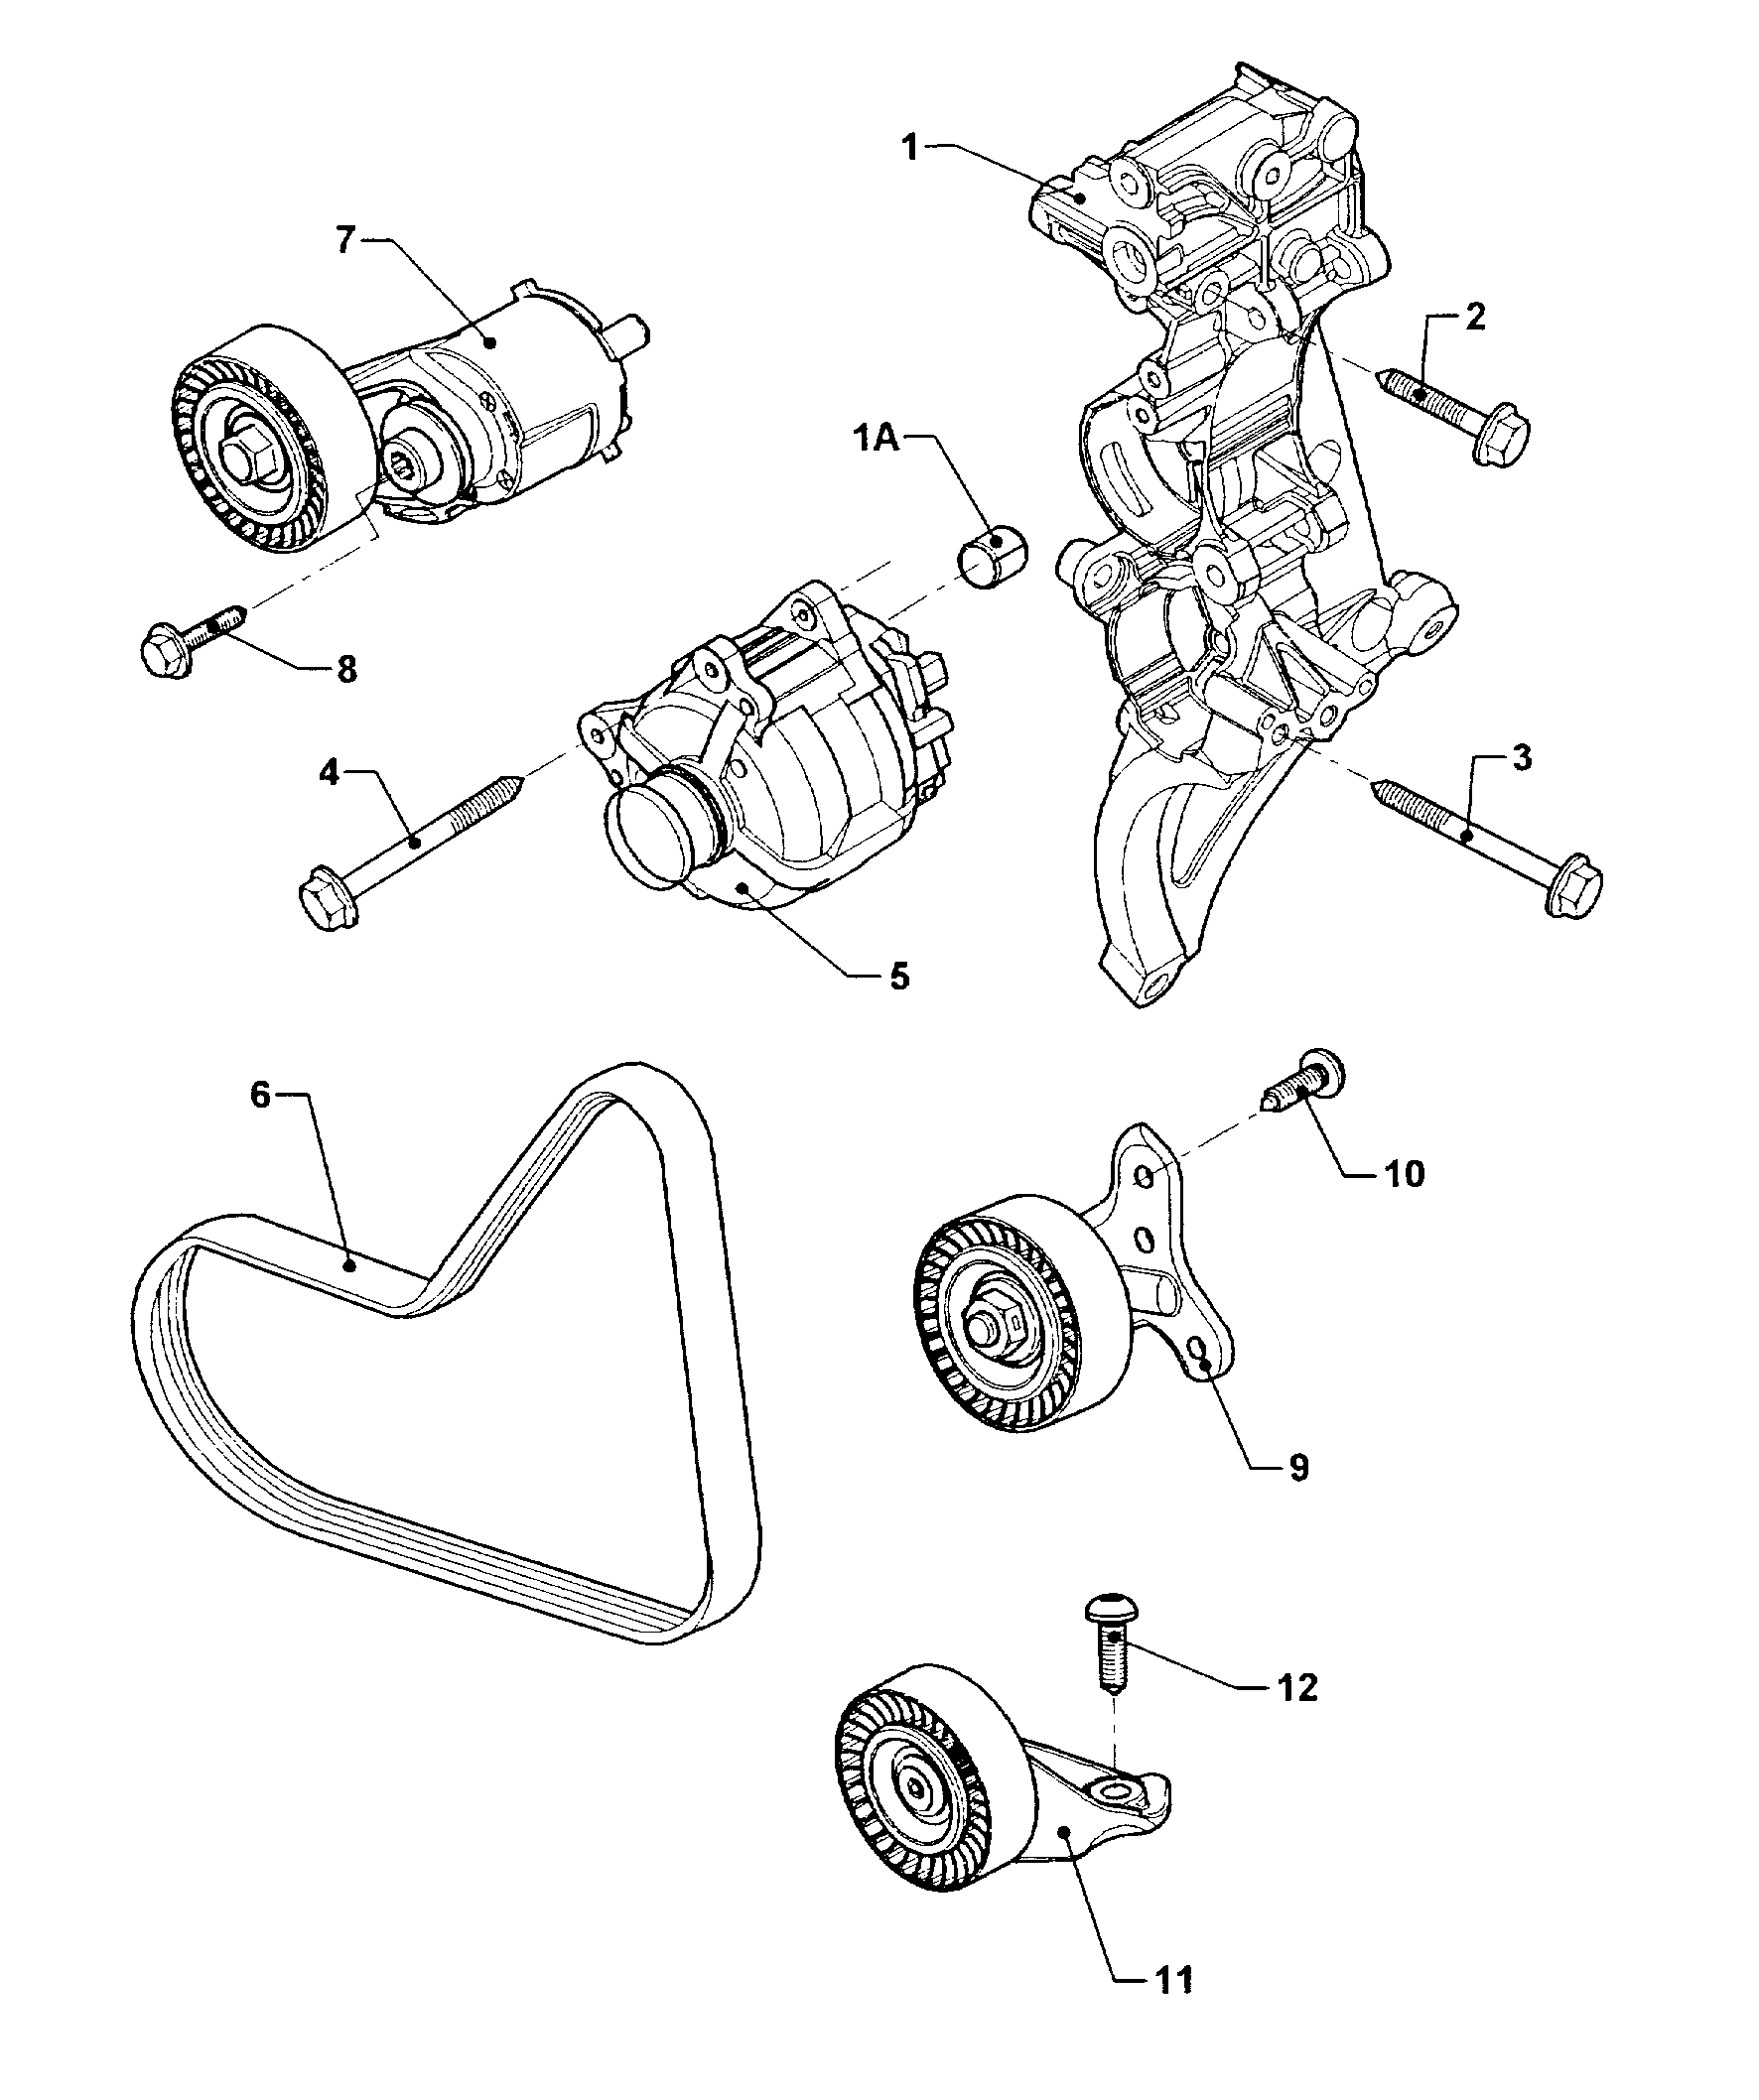 connecting and mounting parts<br>for alternatorPoly-V-belt 2.5Ltr. - Golf/Variant/4Motion - golf